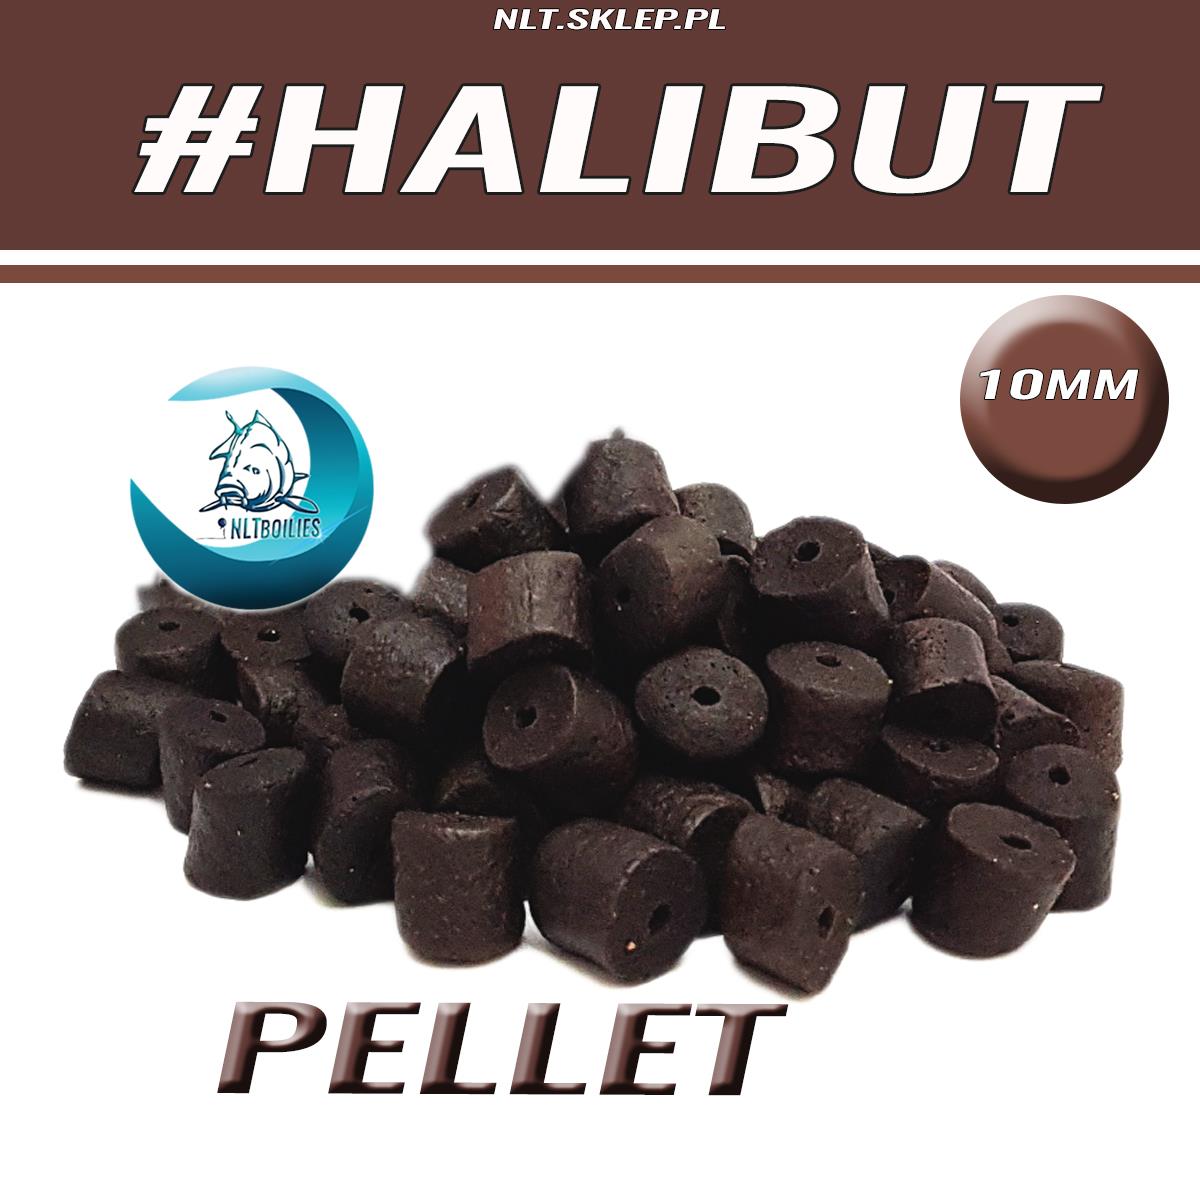 pellet halibut #halibut nlt.sklep.pl no limit team 10mm zanęta karp amur ryby 